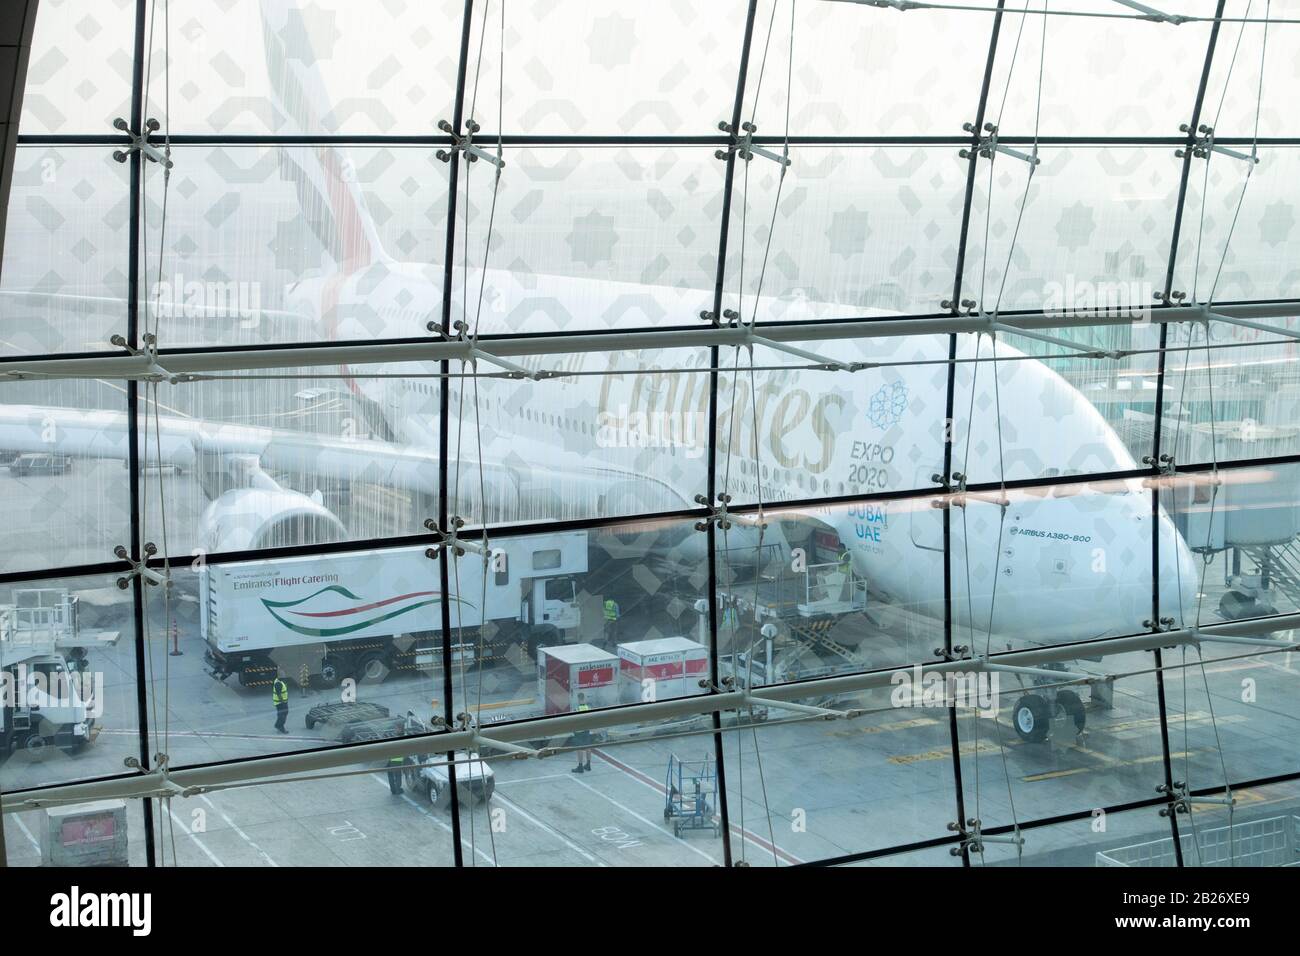 Emirates Air Bus A380 at Dubai International Airport terminal seen through the glass wall of the departure terminal Stock Photo